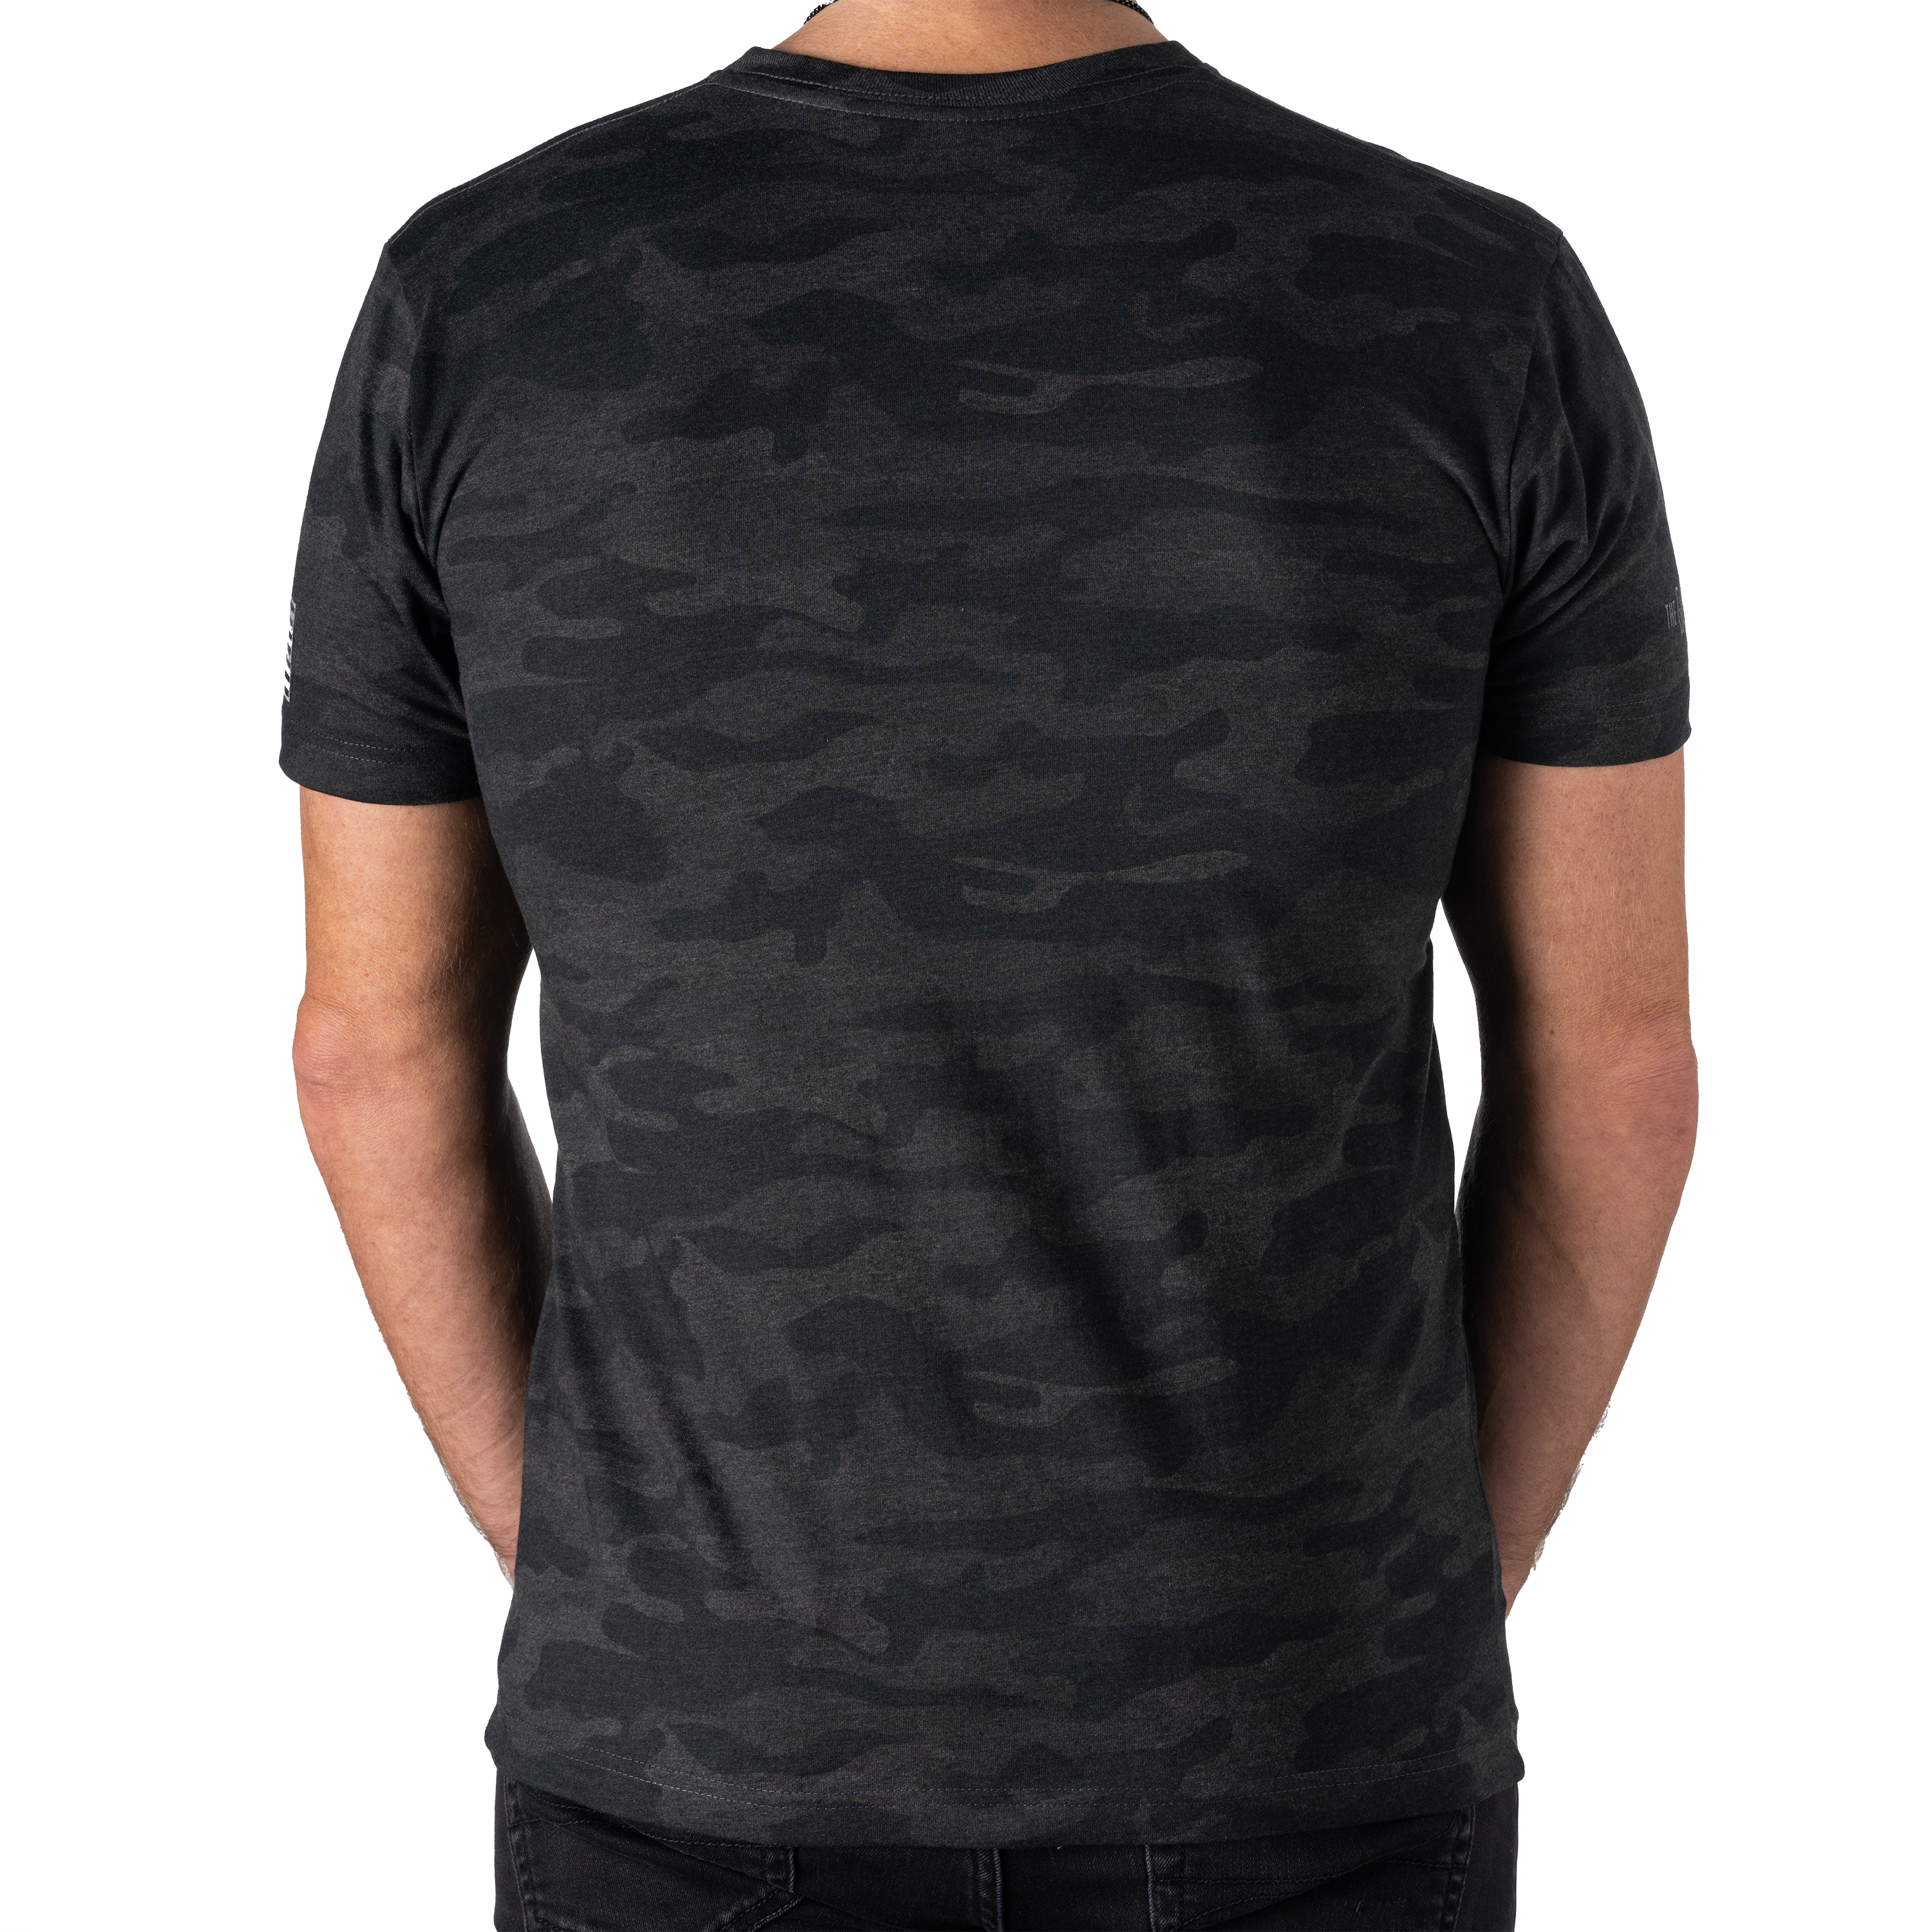 Friday Night Soldier T-Shirt: Black Camo